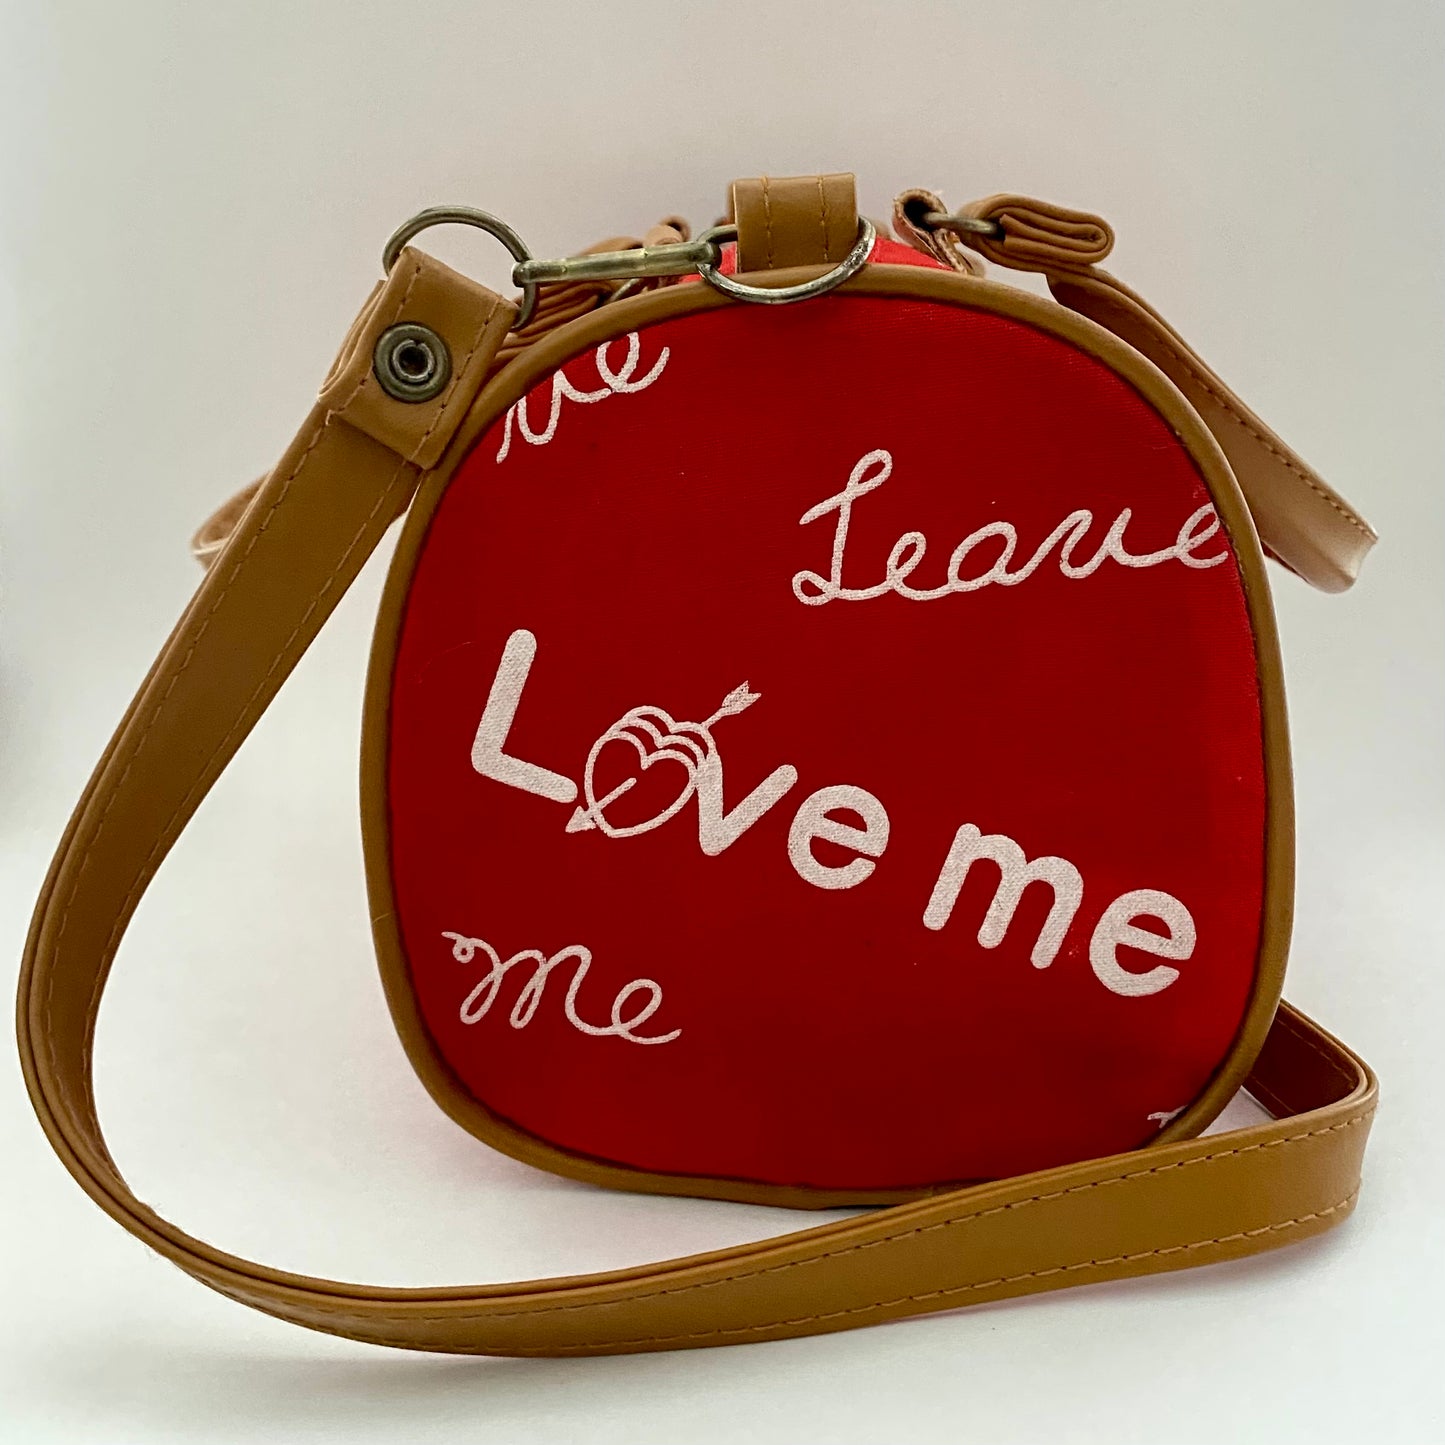 1980s "Love Me, Leave Me" Canvas Handbag